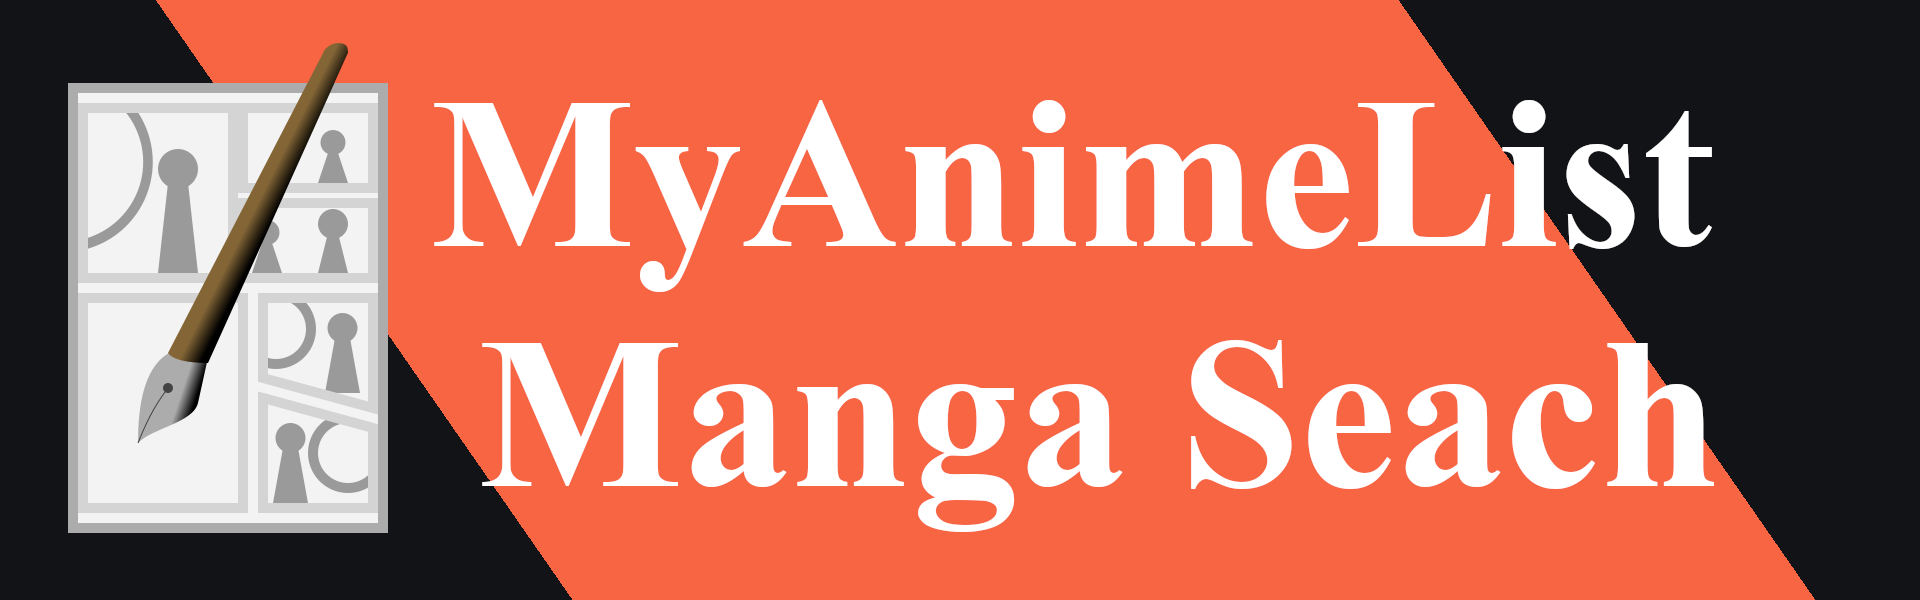 MAL Manga Search Banner